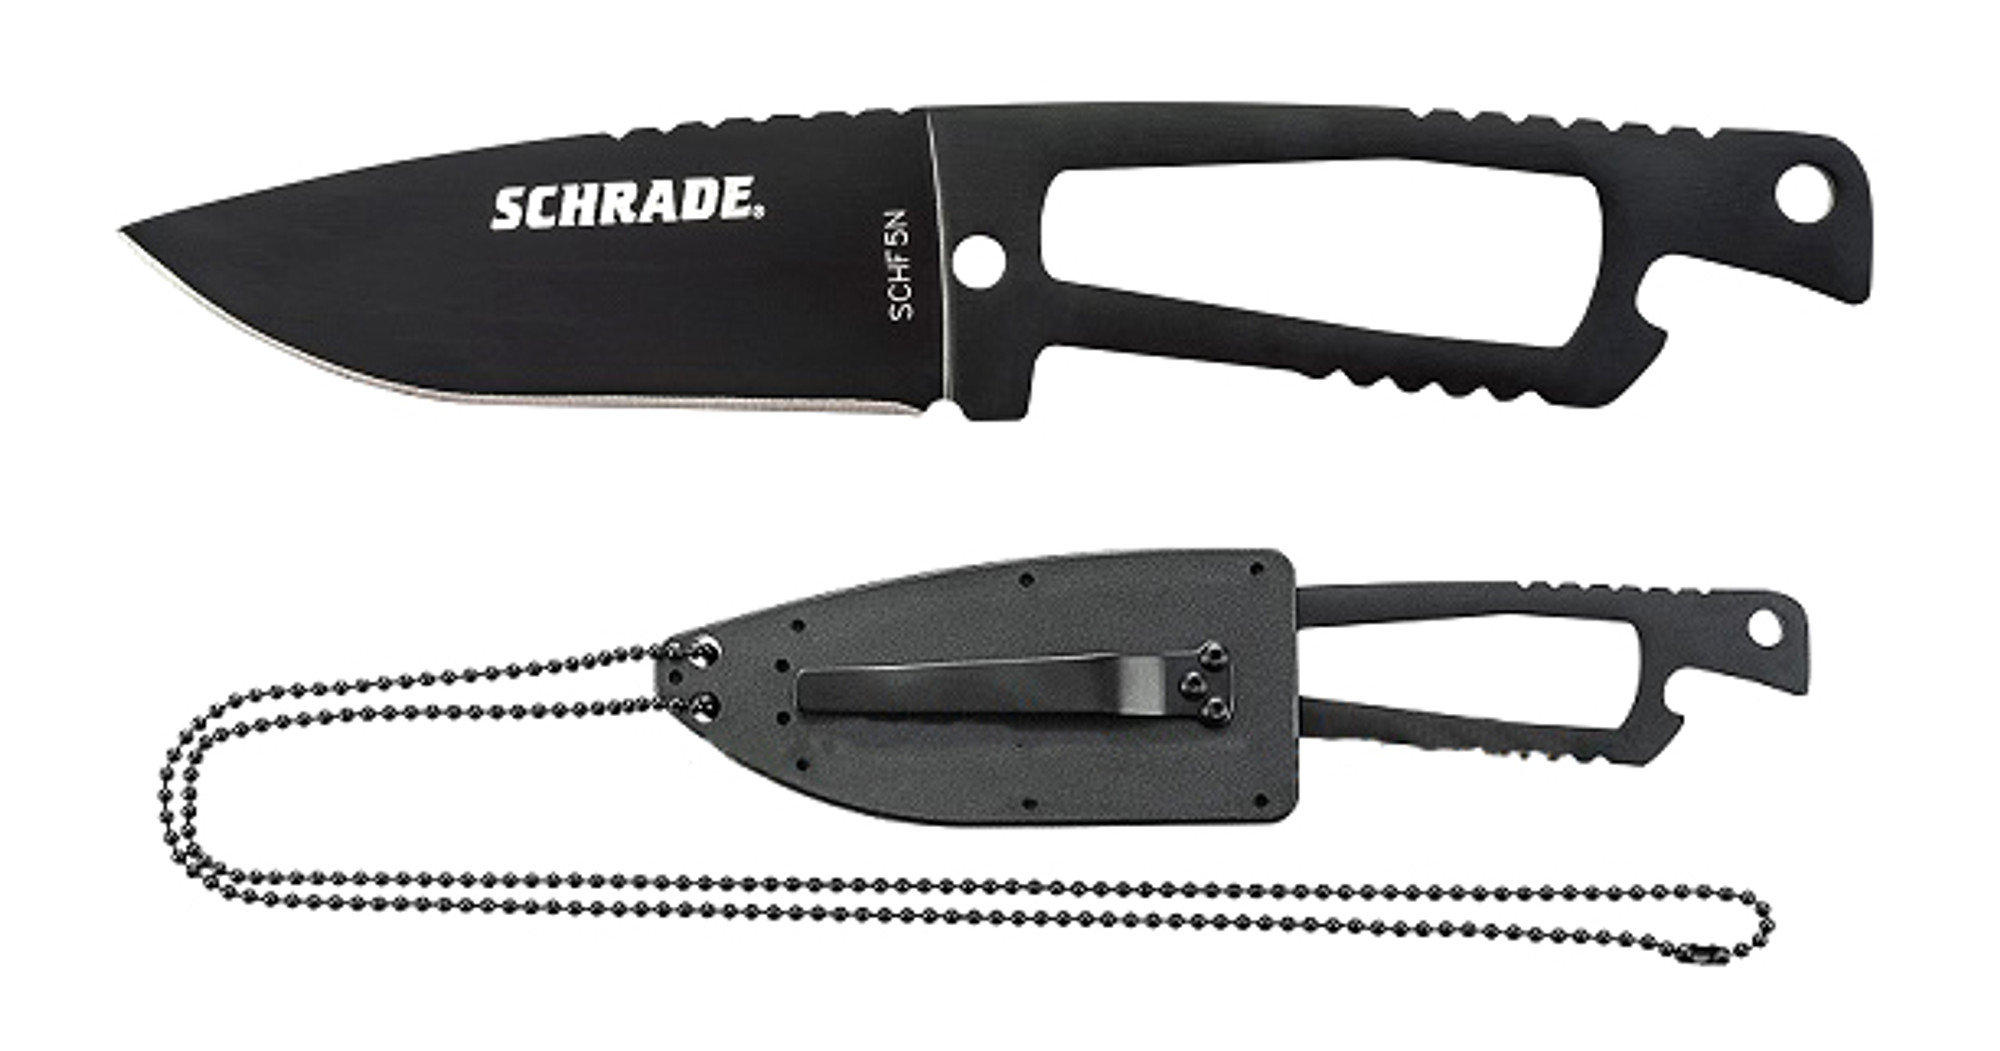 Schrade F5N Extreme Suvival Skeletonized Neck Knife